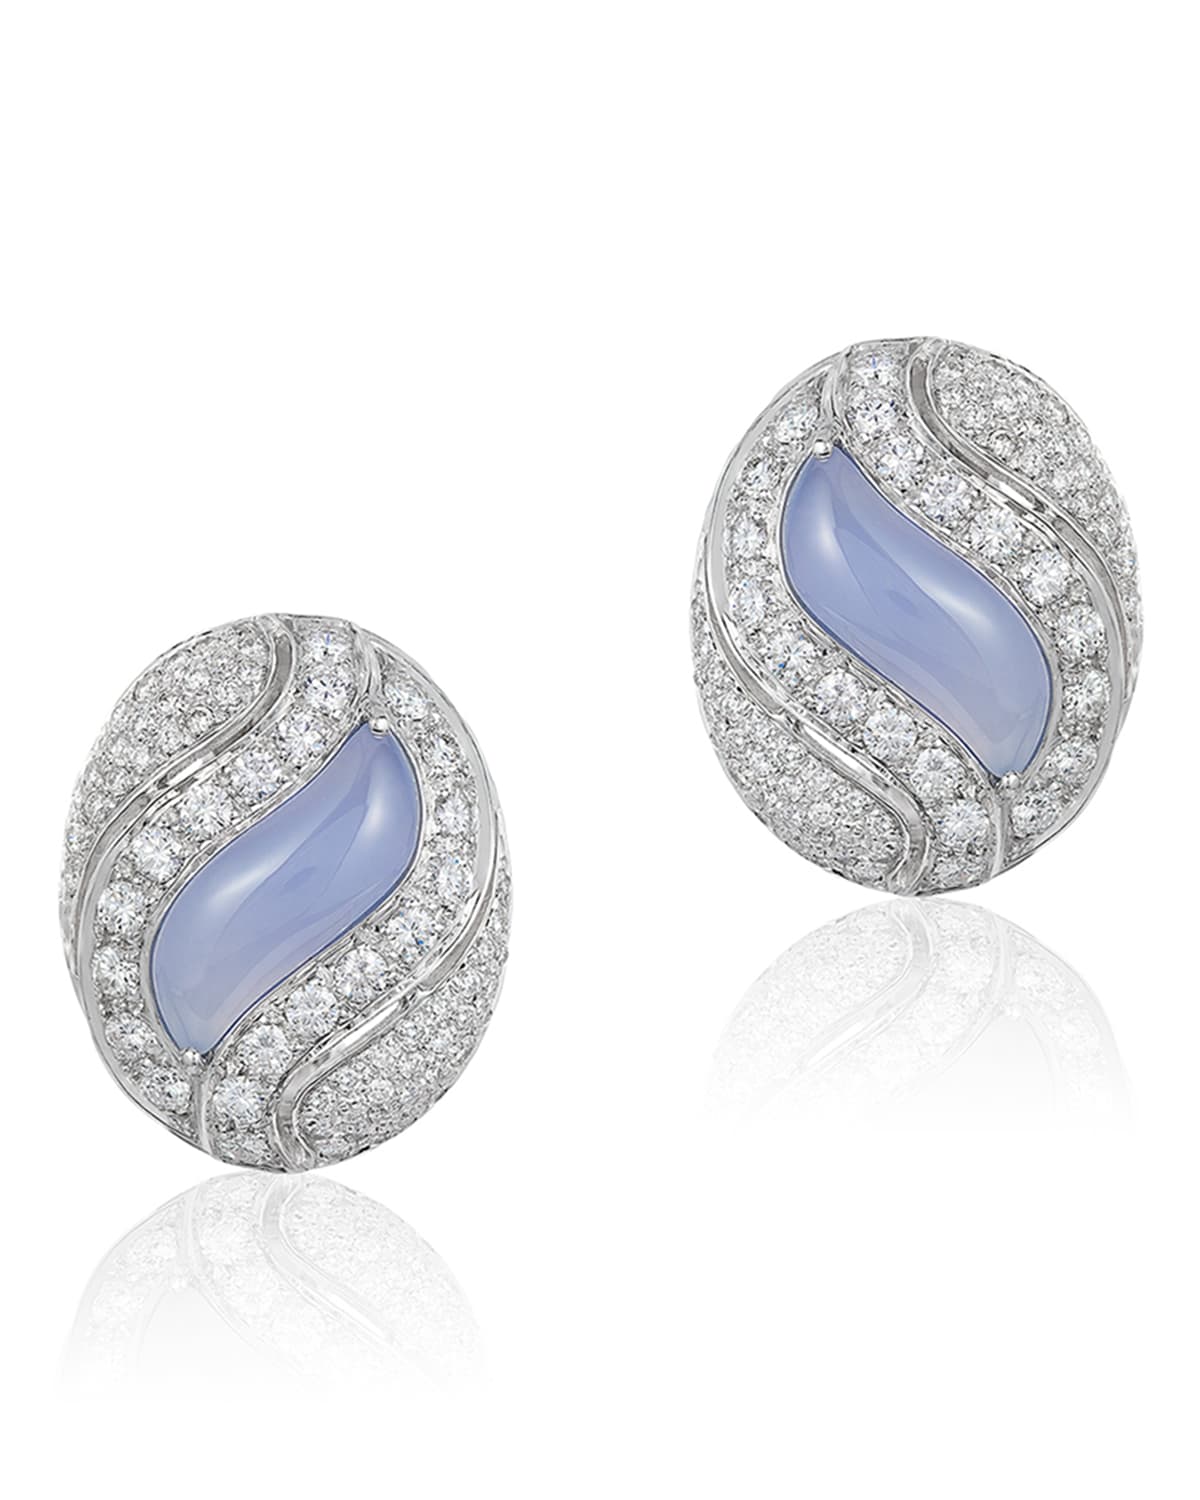 Andreoli 18k White Gold, Diamond & Purple Chalcedony Earrings